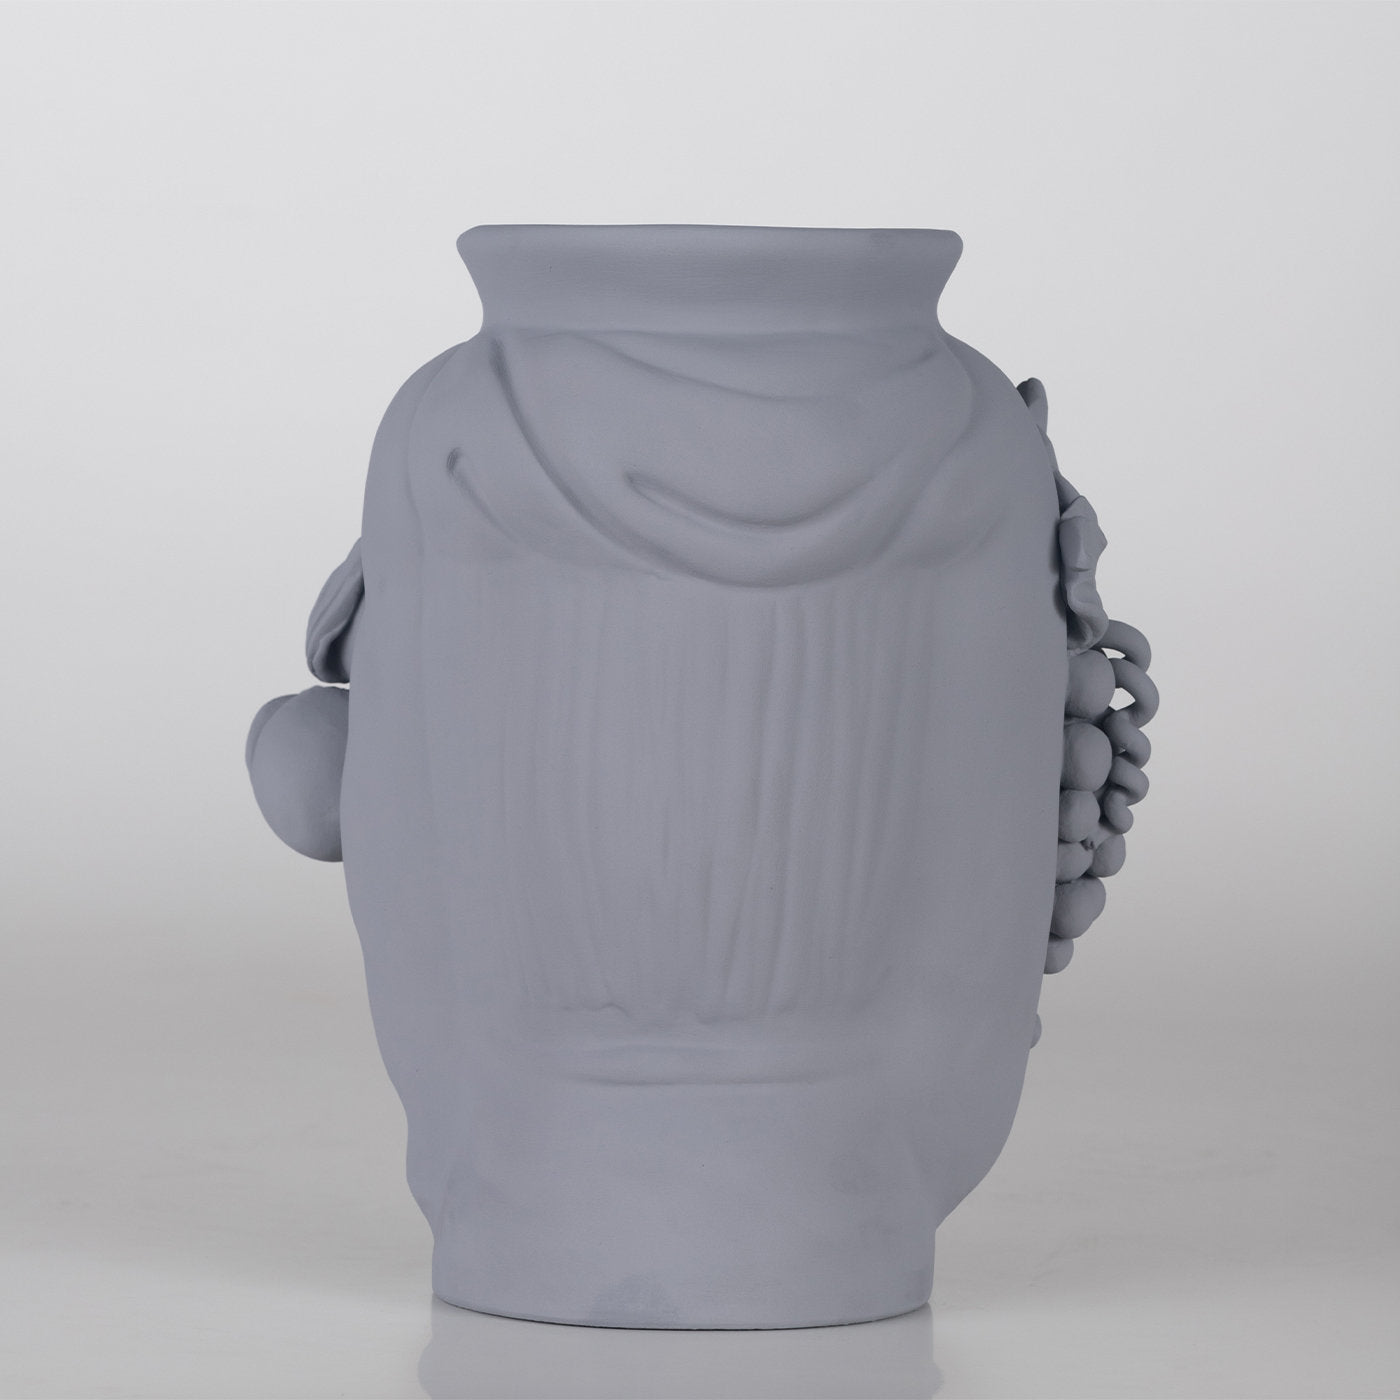 Sasà Light Gray Vase - Alternative view 1